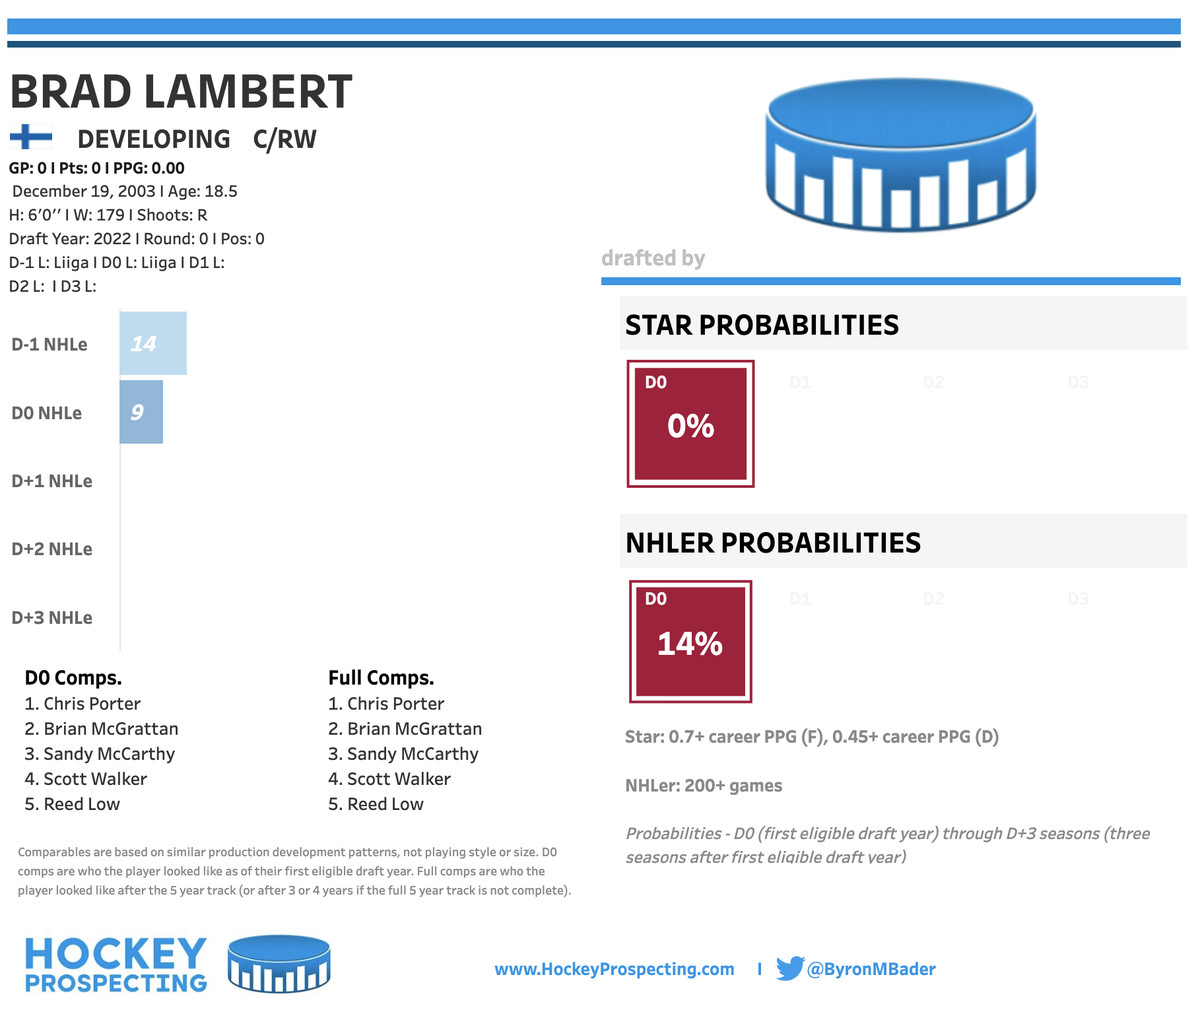 Byron Bader's Star and NHLer Probability of Brad Lambert